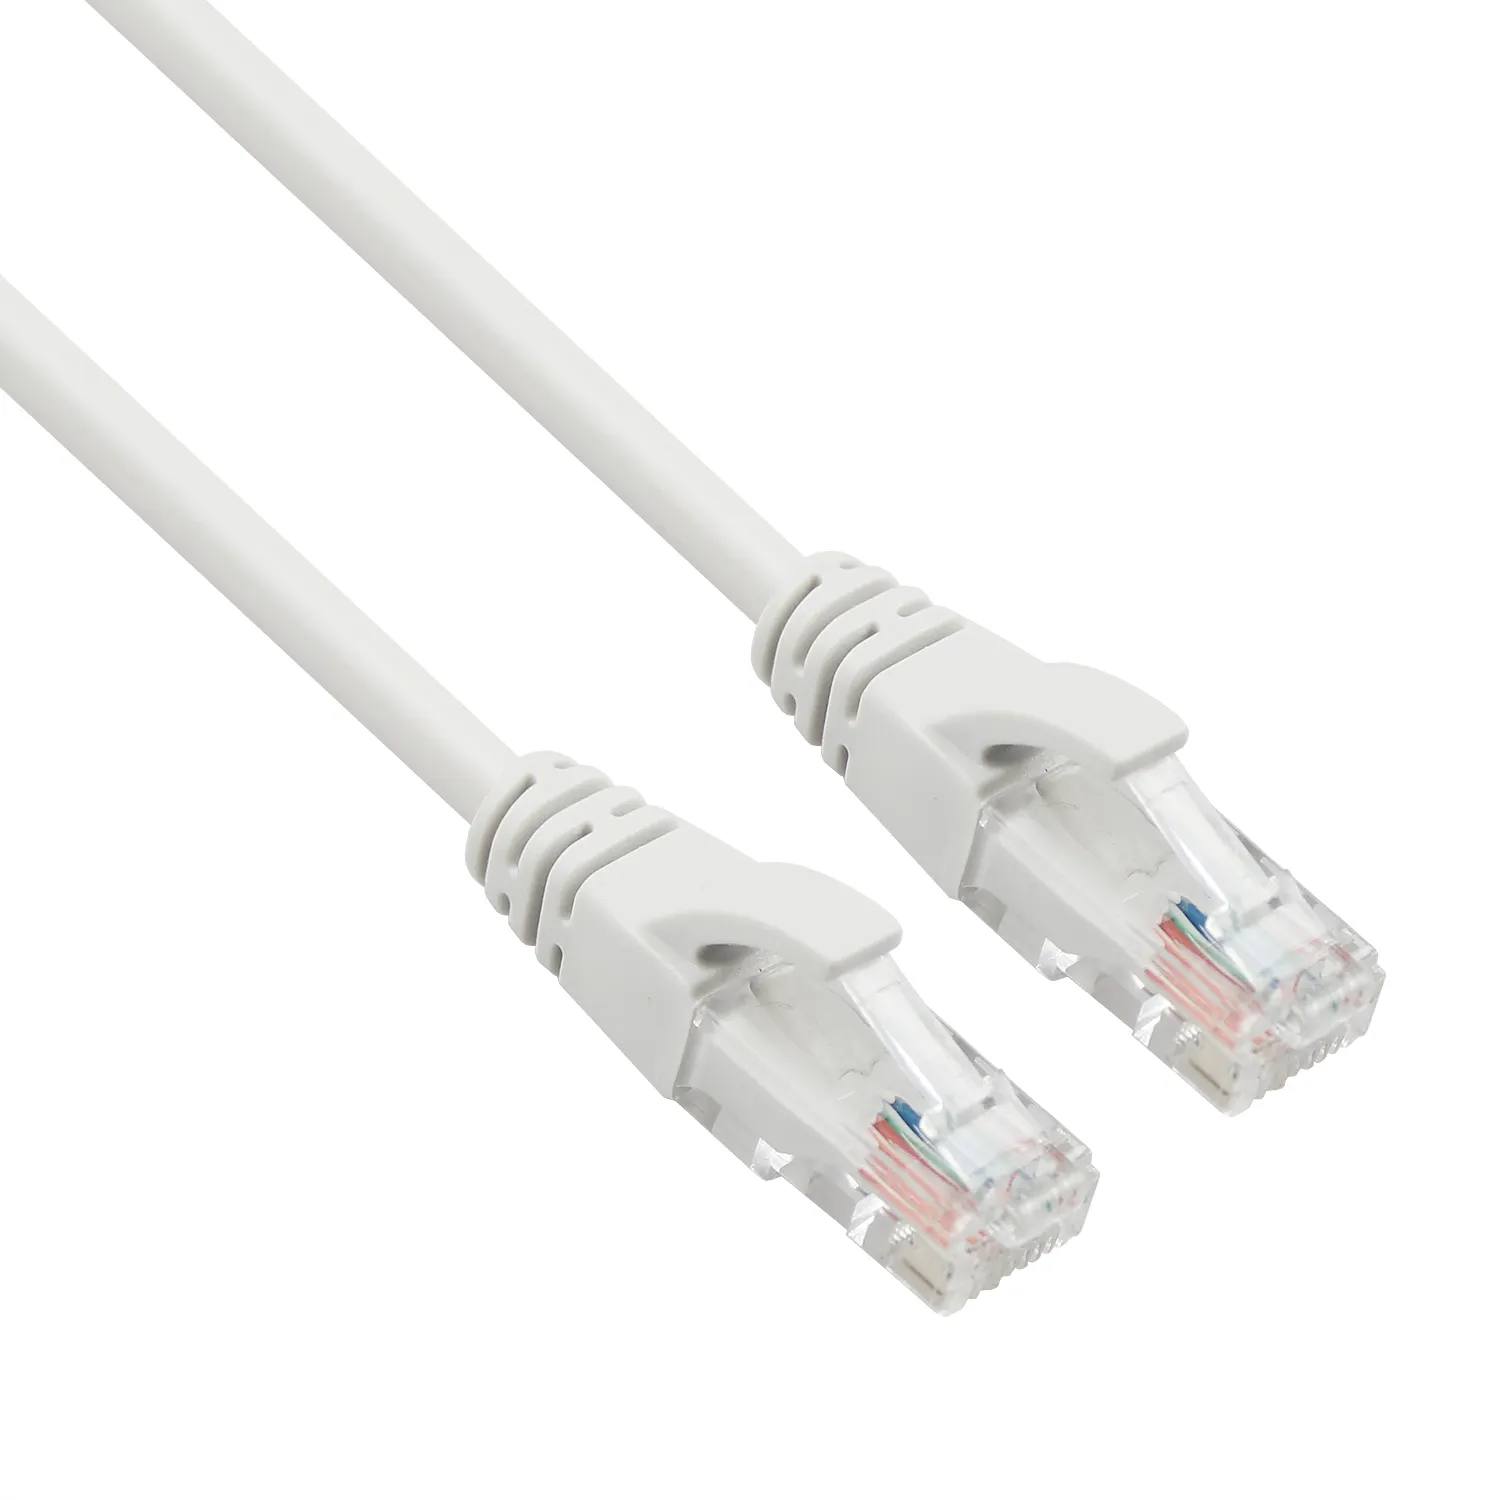 VCOM RJ45 To RJ45 Plug UTP Cat5 Cat6 Patch Cable Network Cable Color Code Cat6 Lan Cable